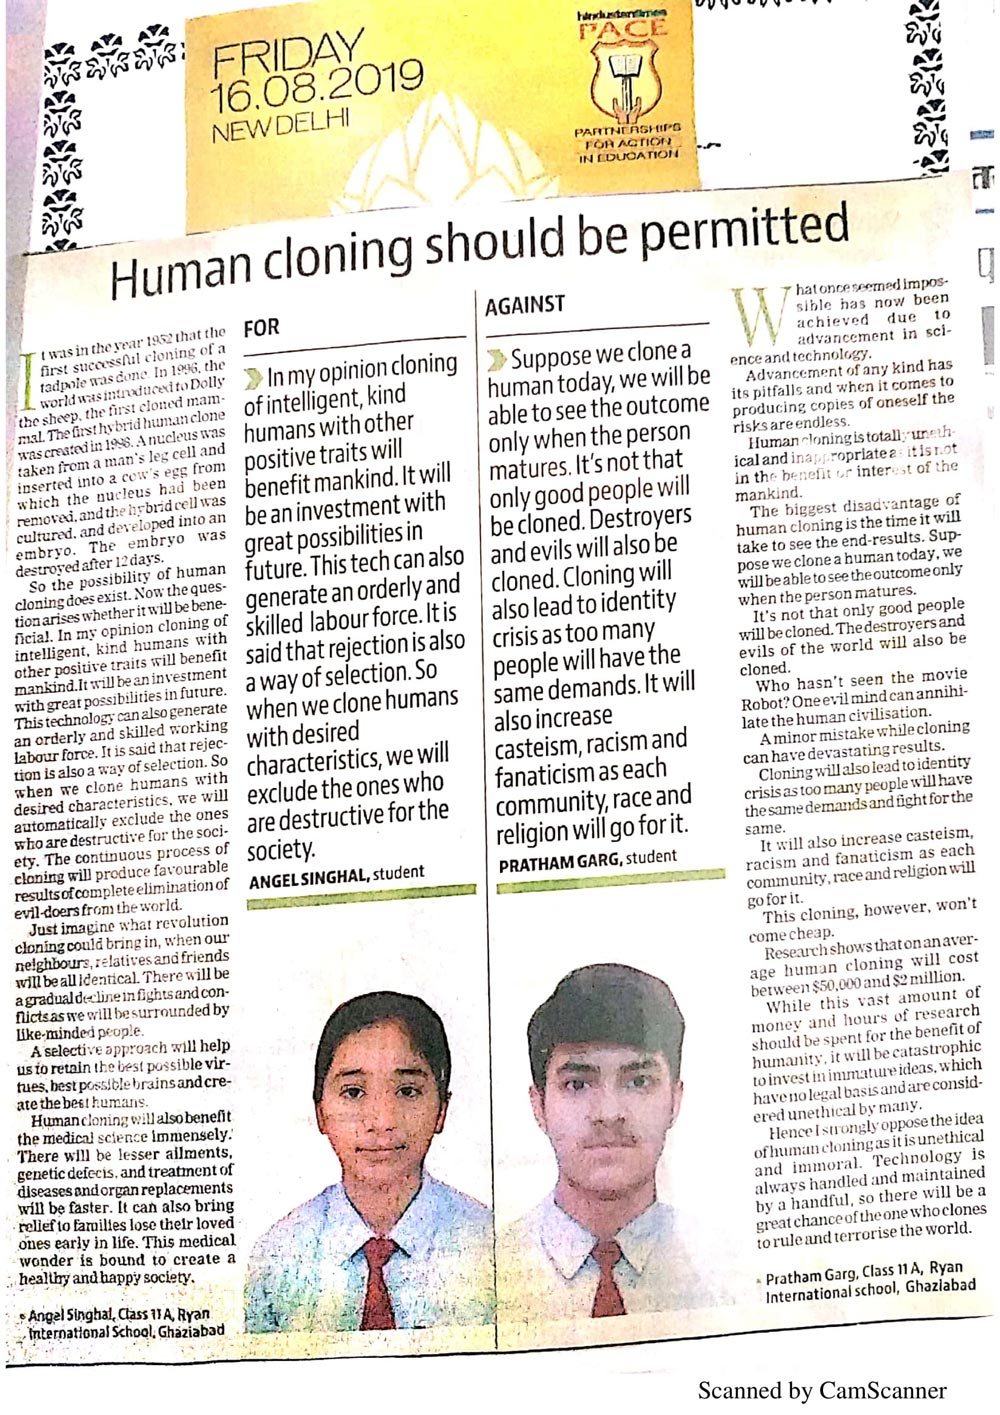 A debate: human cloning should be permitted - Ryan International School, Dasna